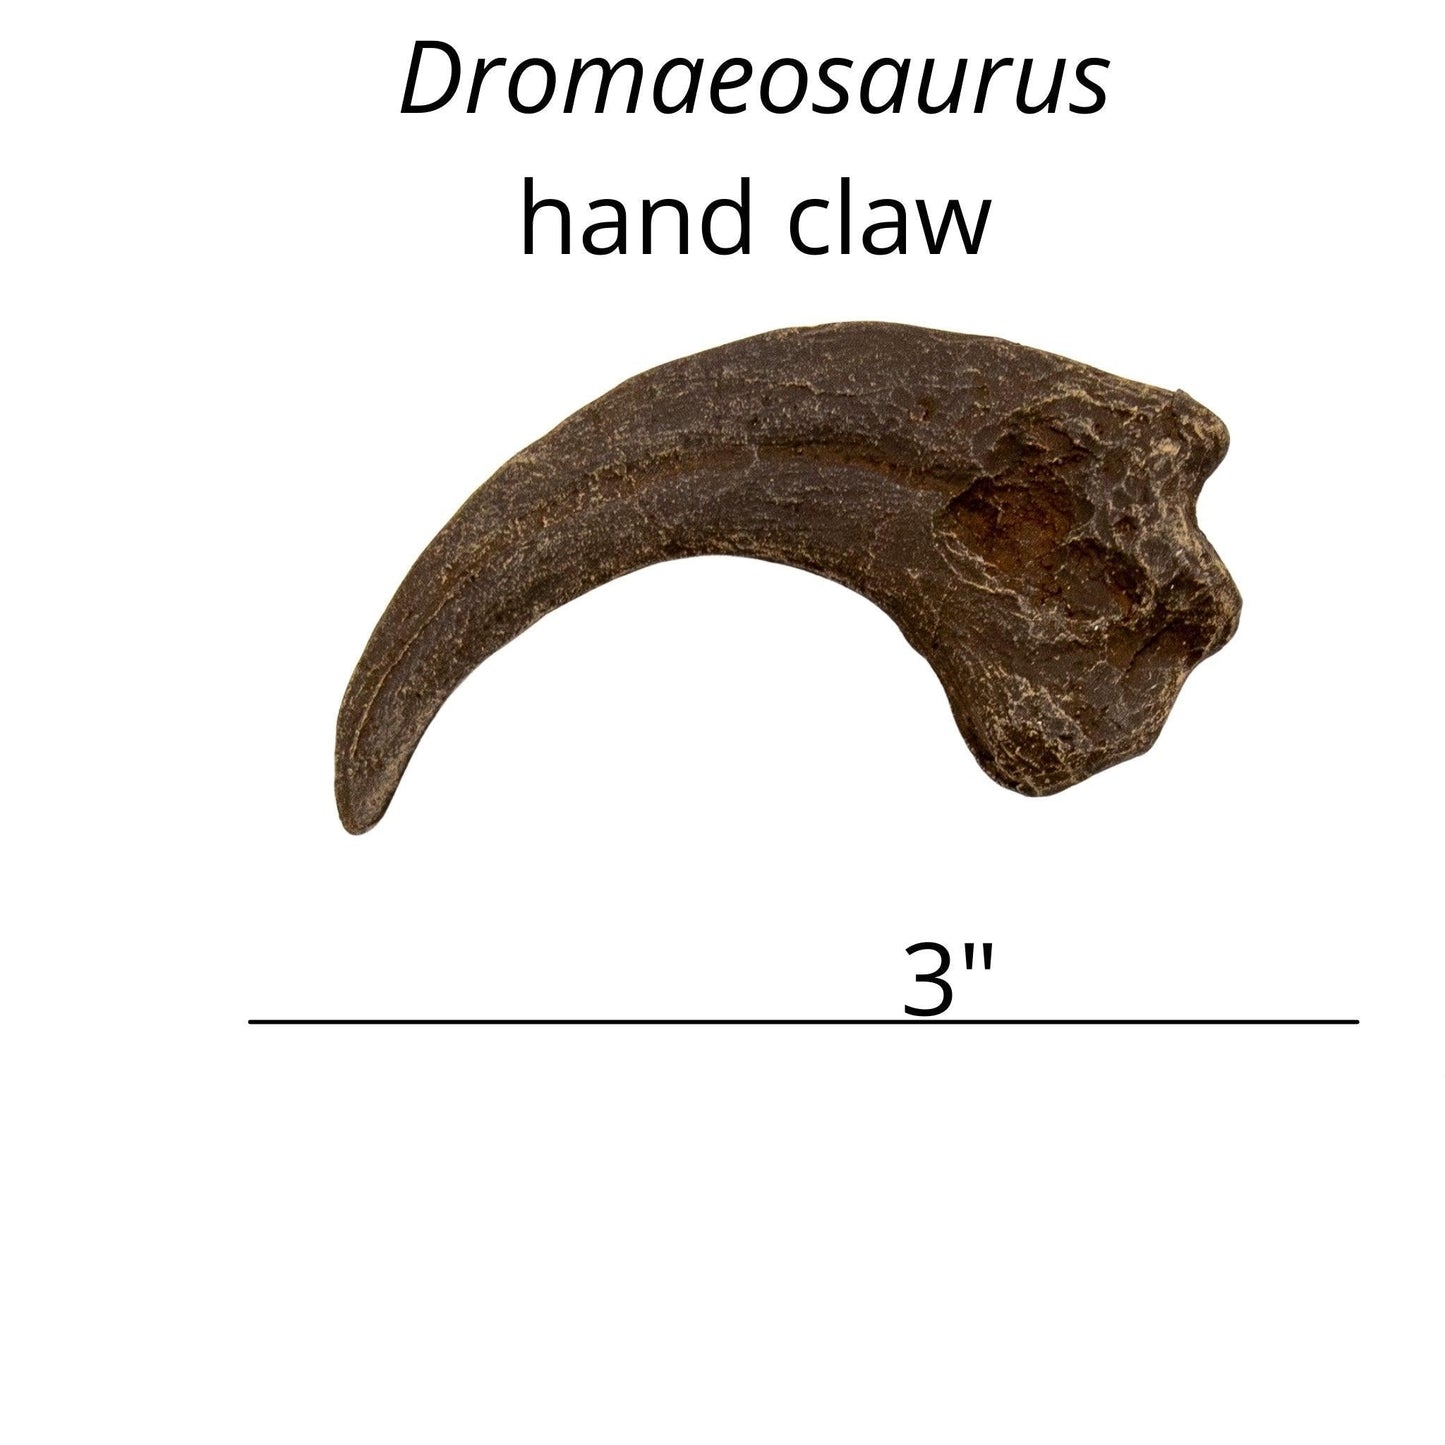 Dromaeosaurus hand claw cast